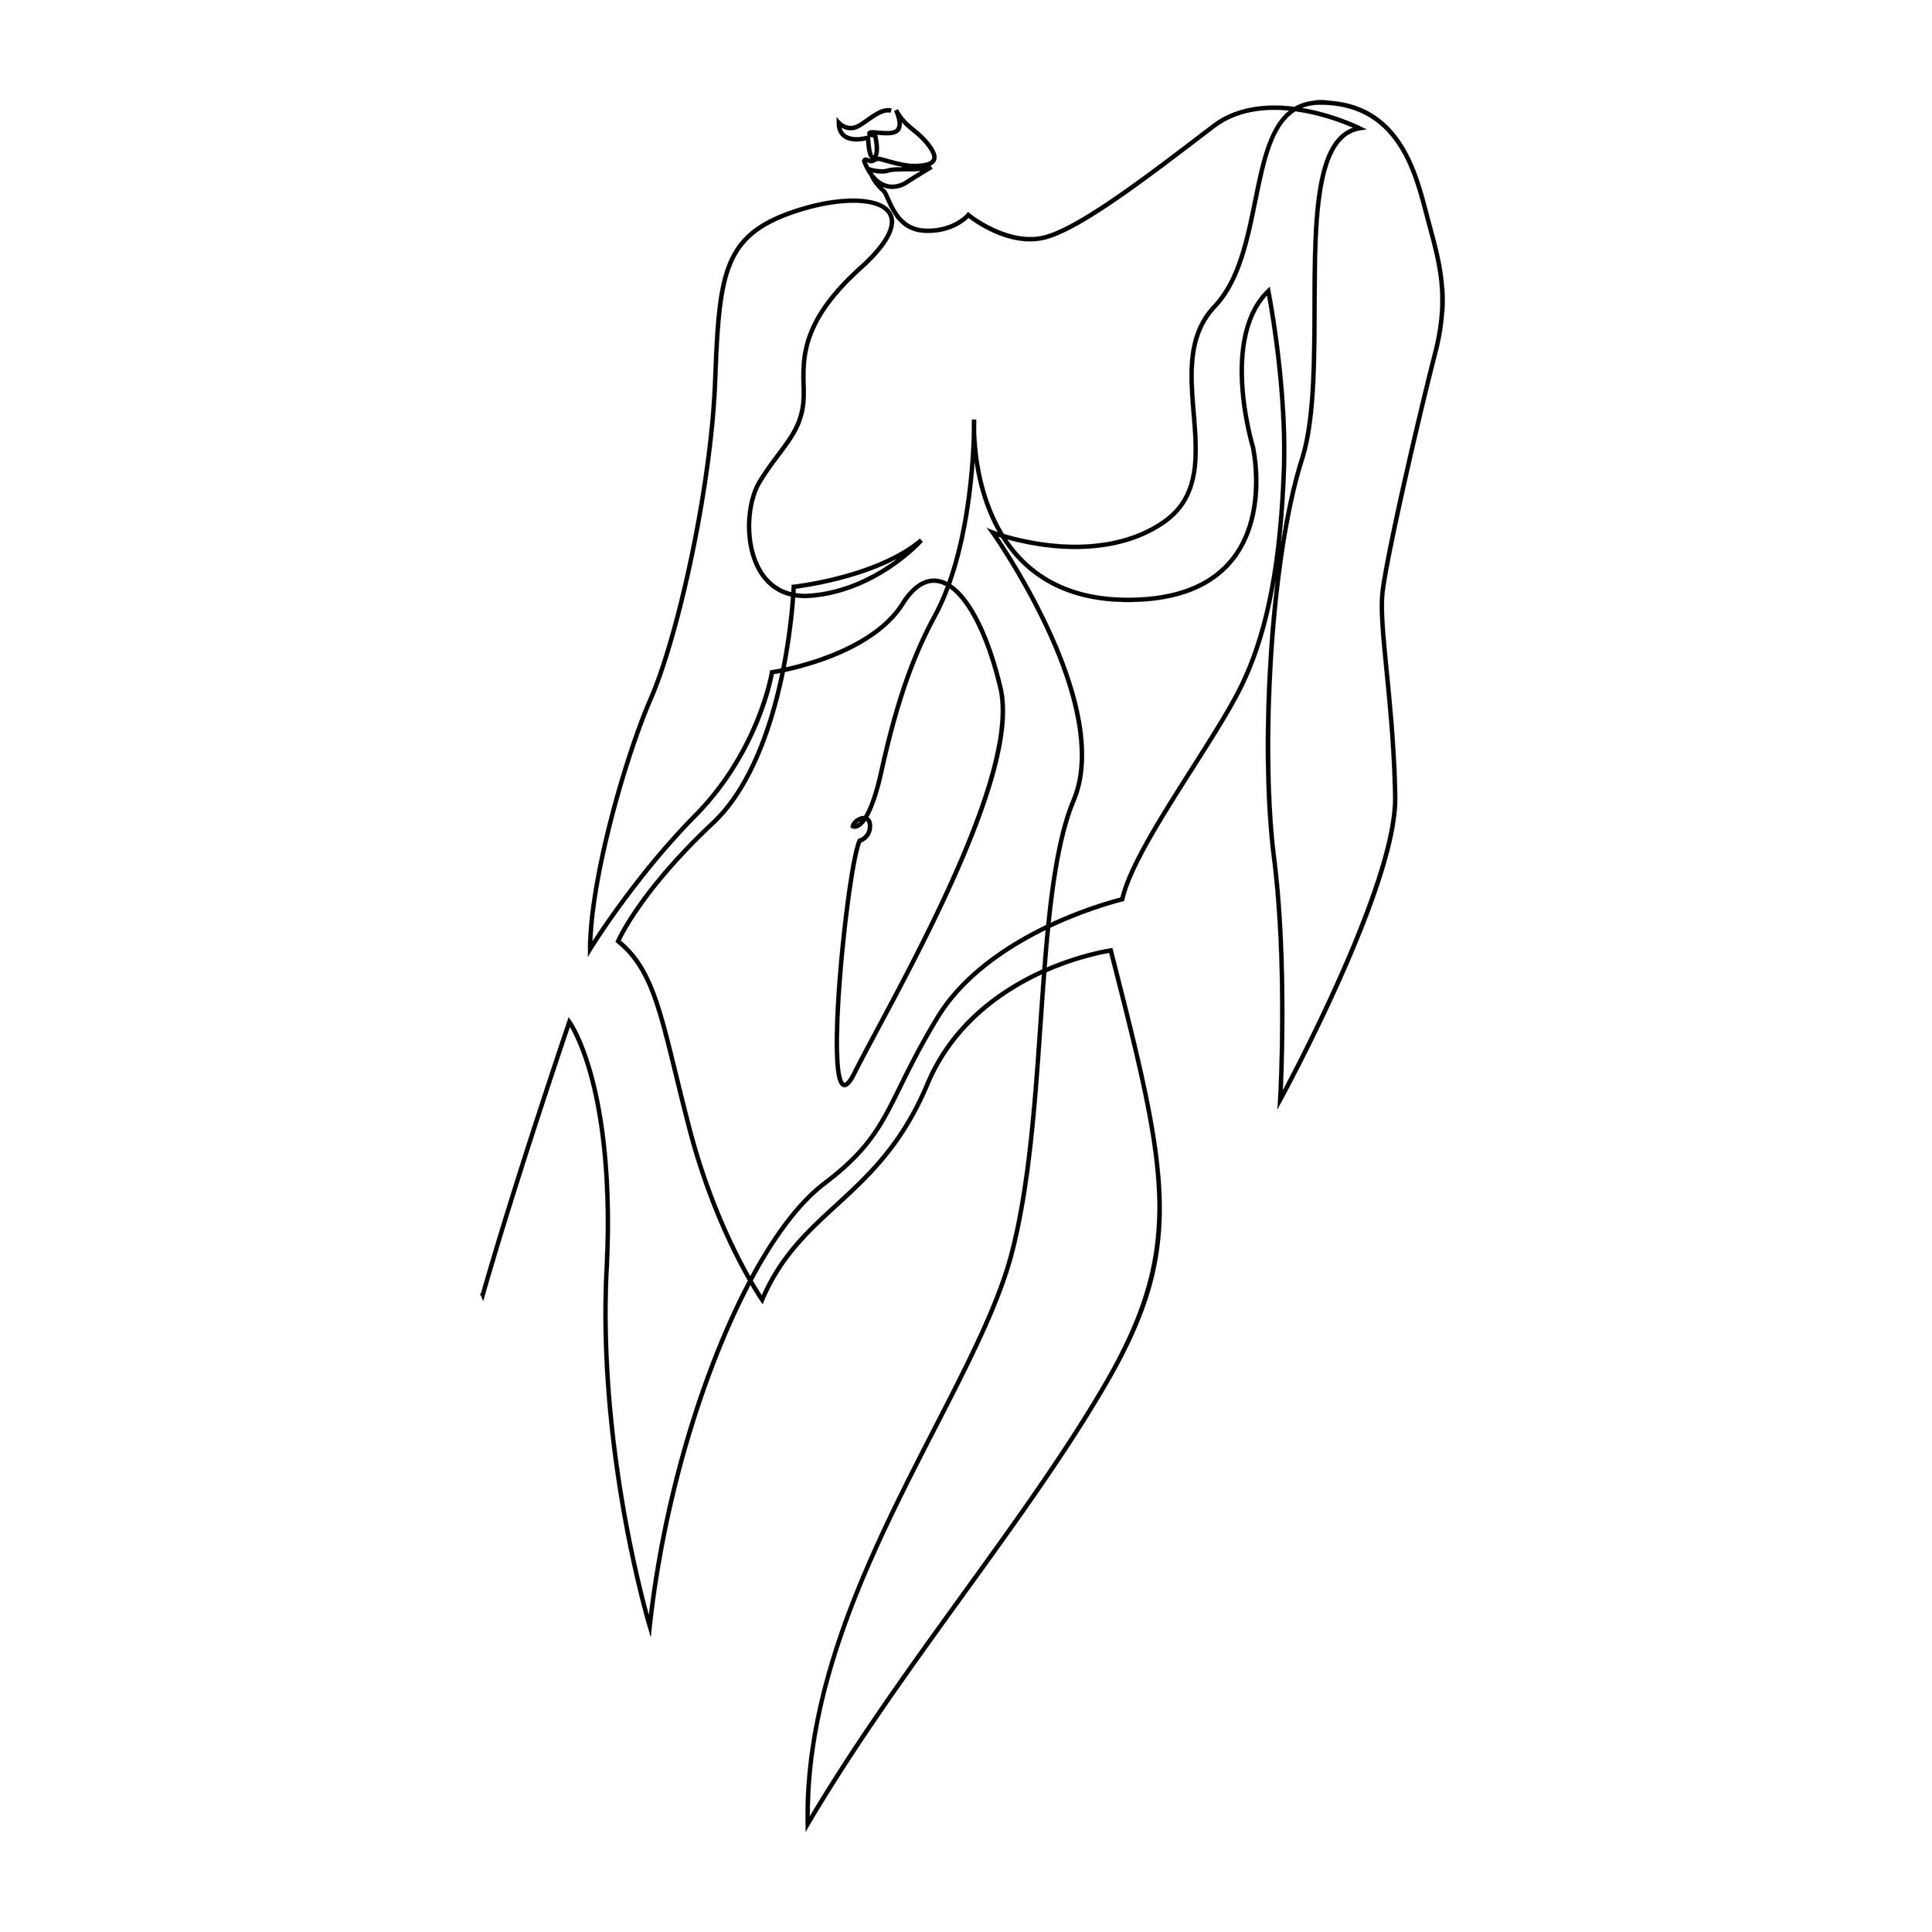 Эскиз женского тела